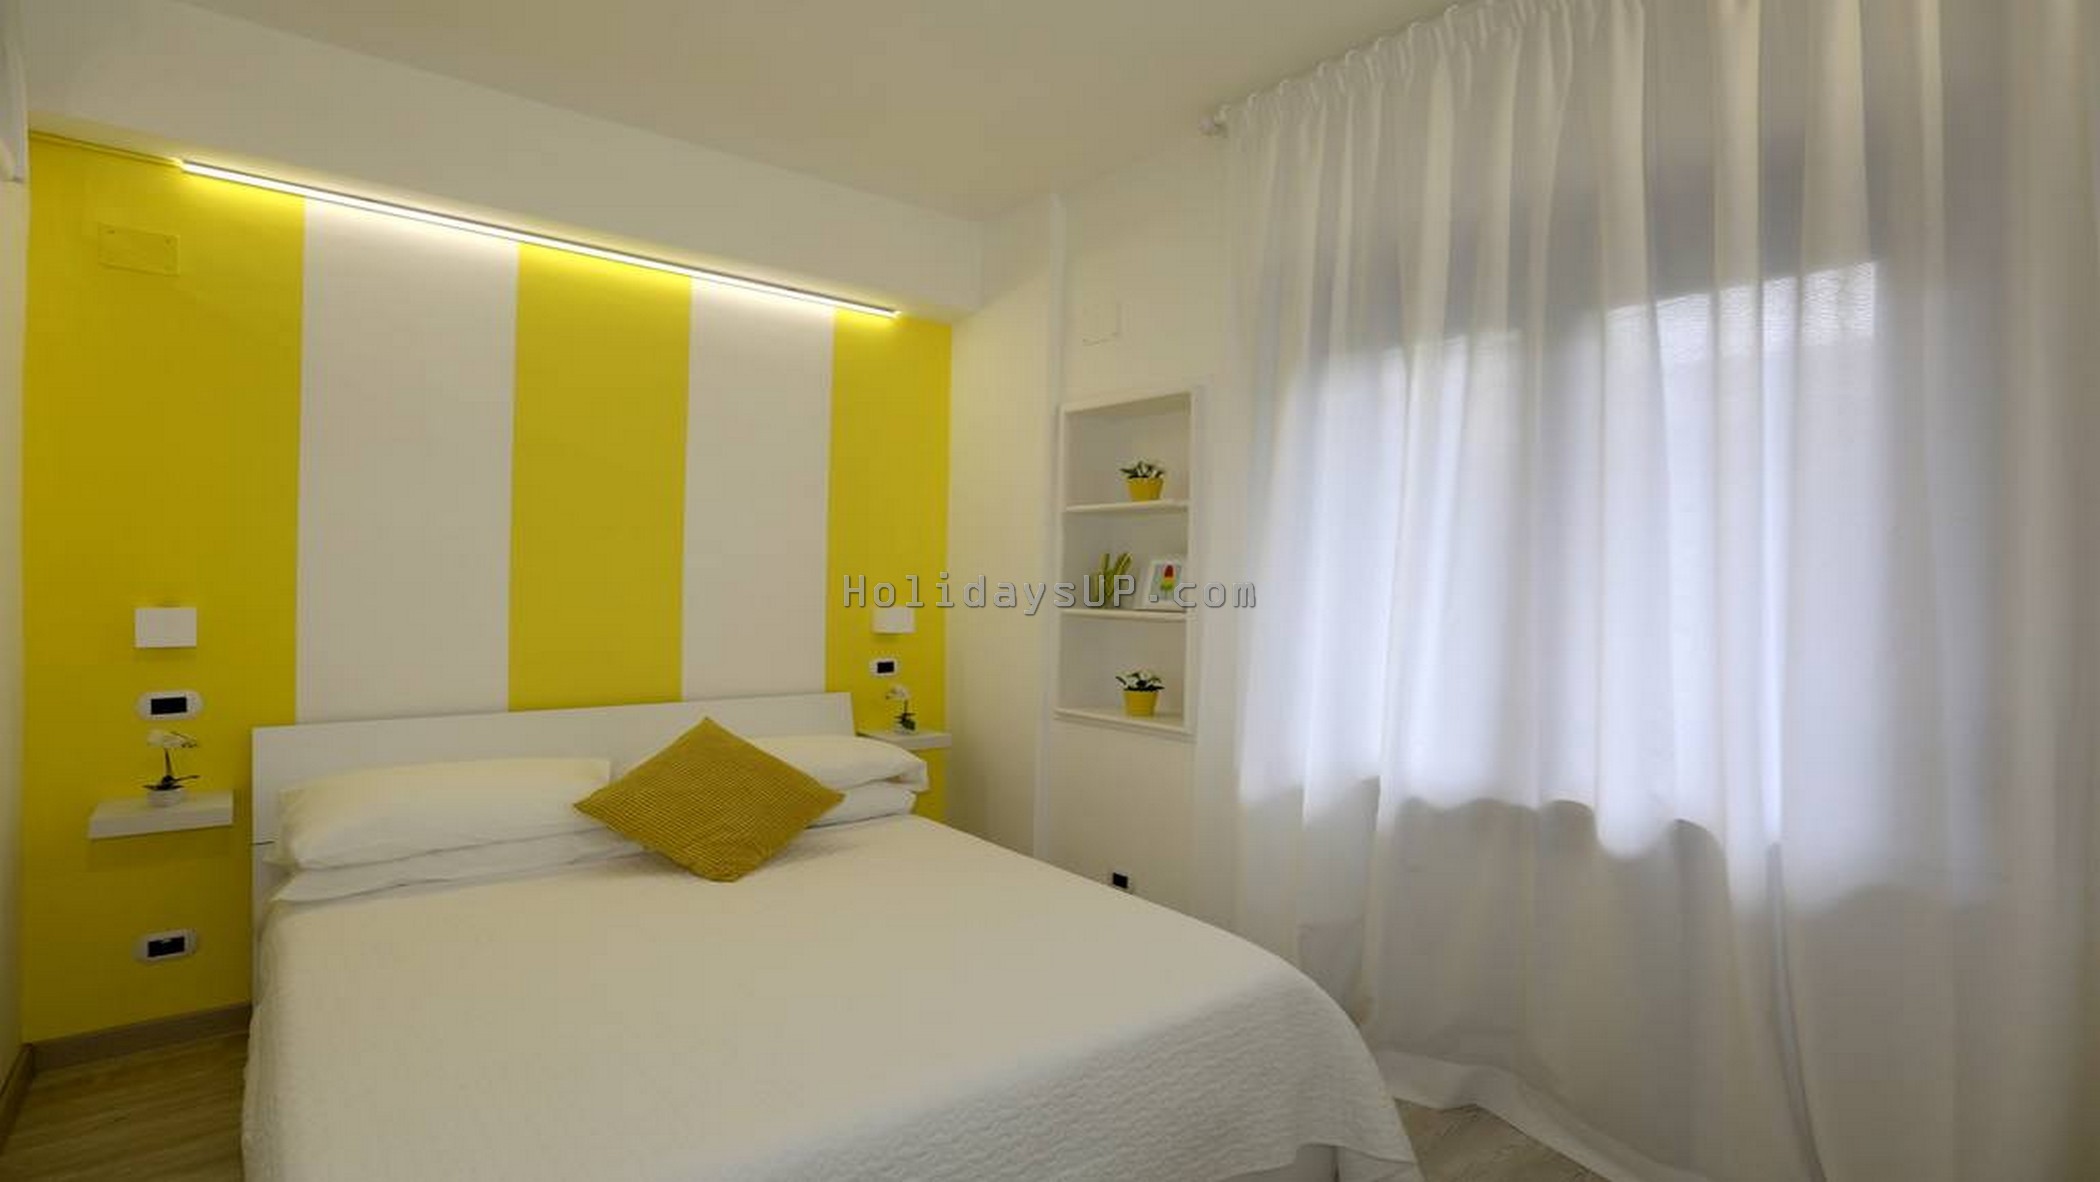 Double bedroom Casa Mariandre B apartment holidays up accomodation